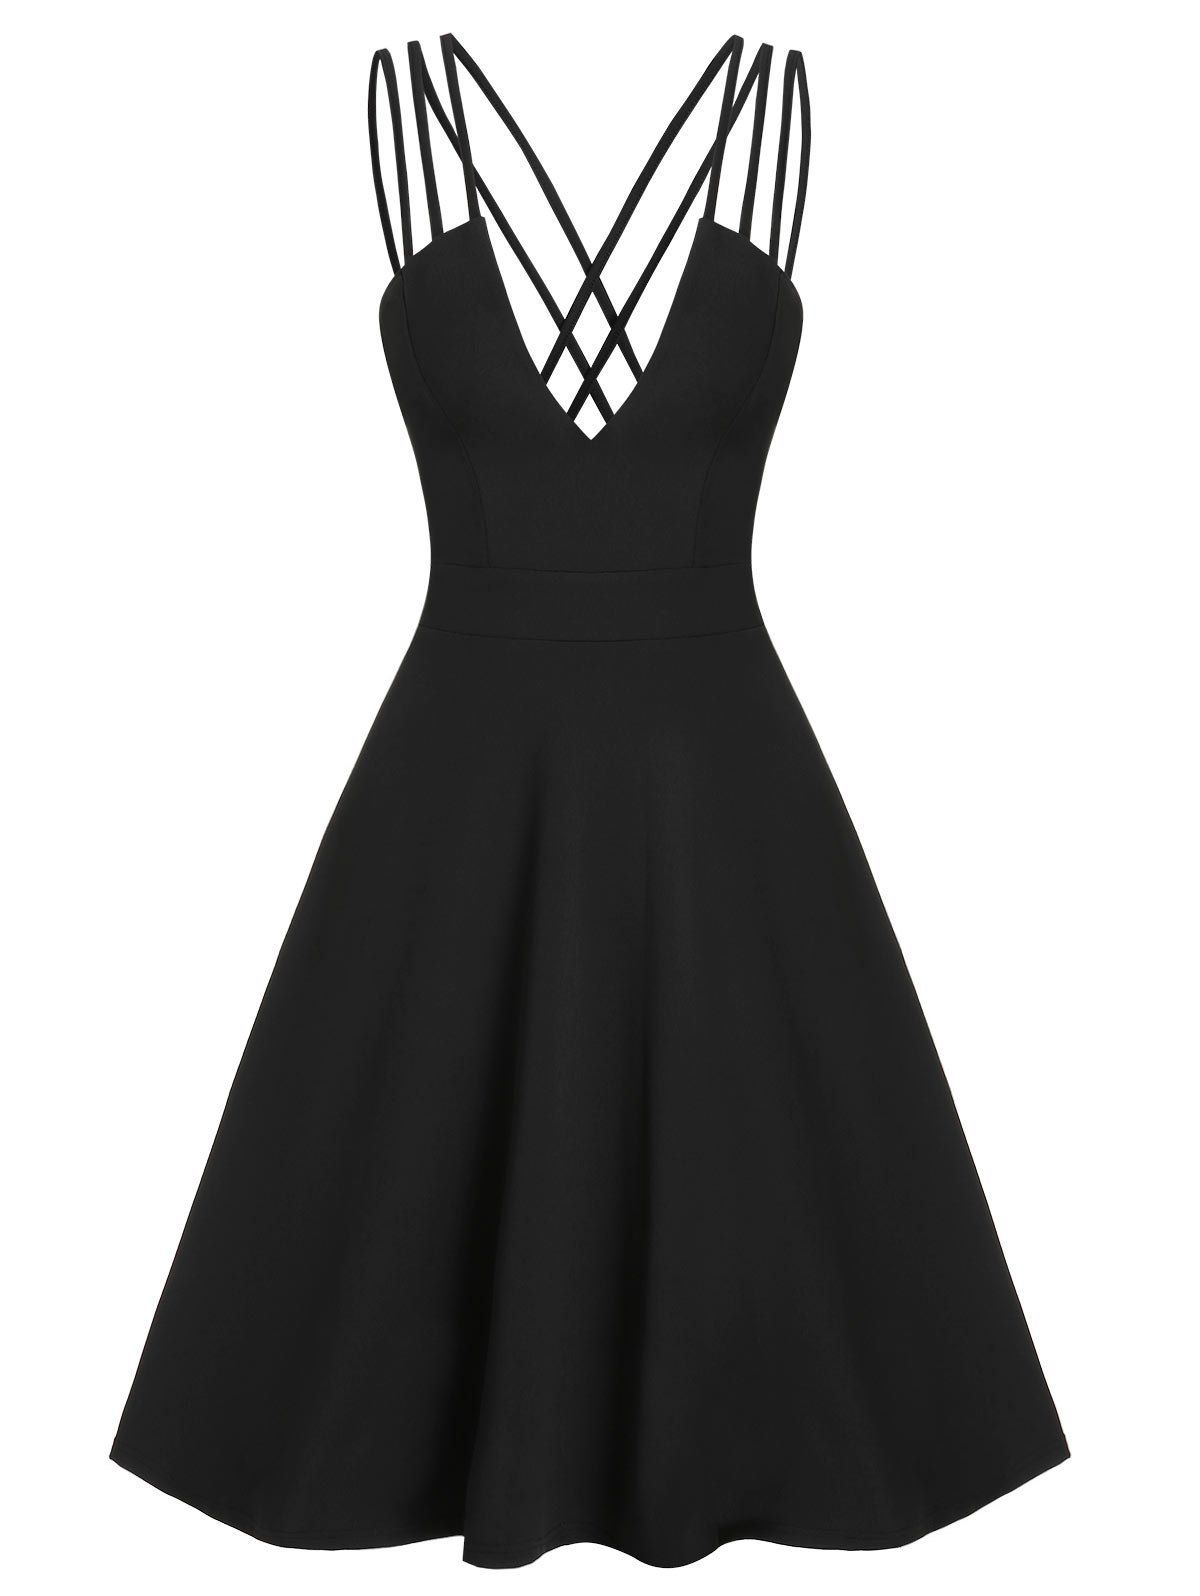 [32% OFF] 2021 Low Cut V Neck High Waist Backless Dress In BLACK ...